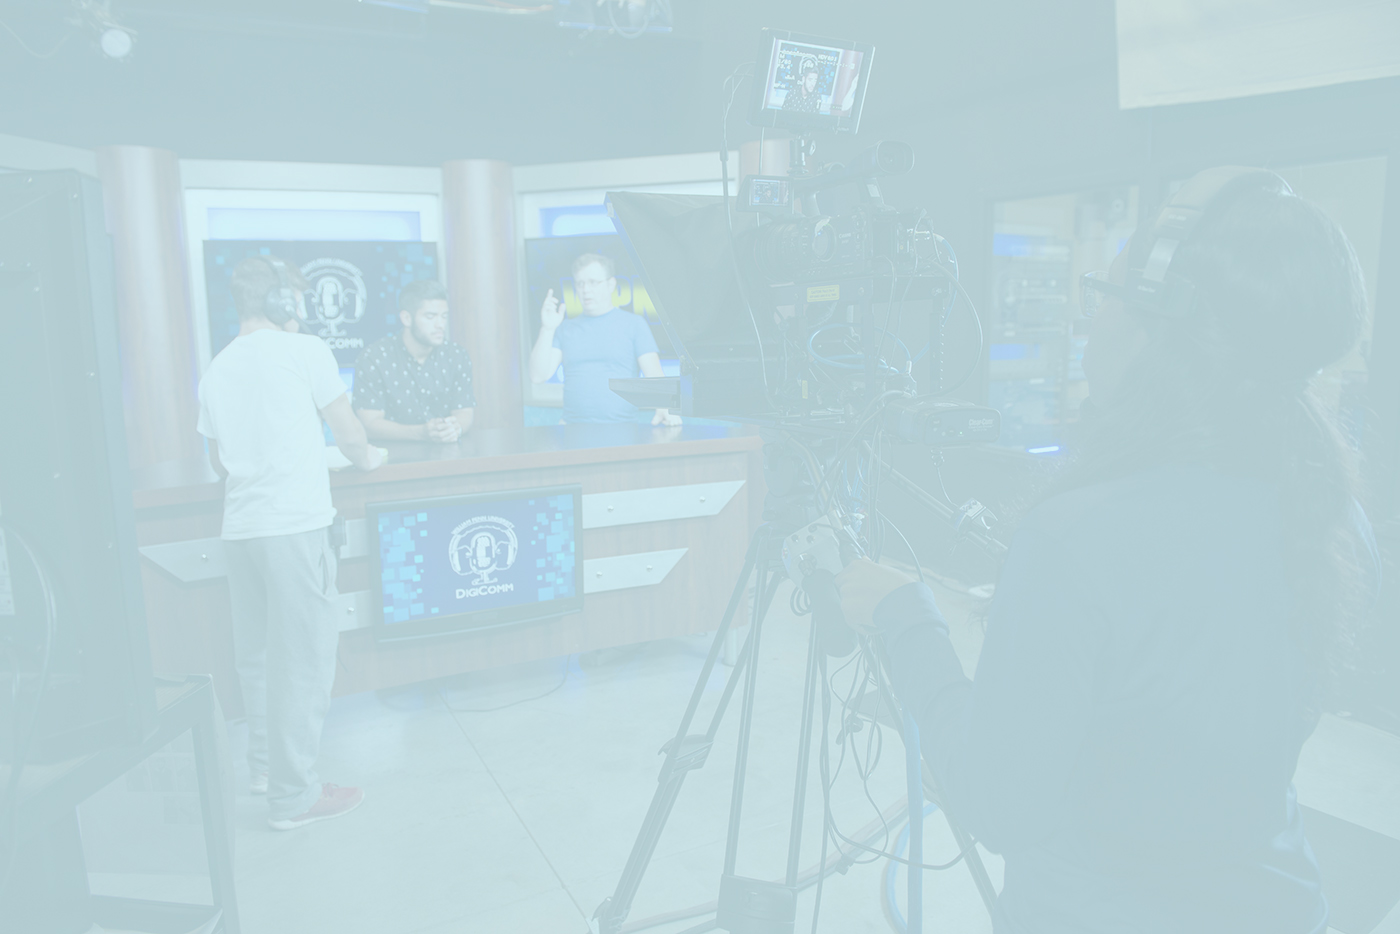 news crew at work in the MUSCO studio